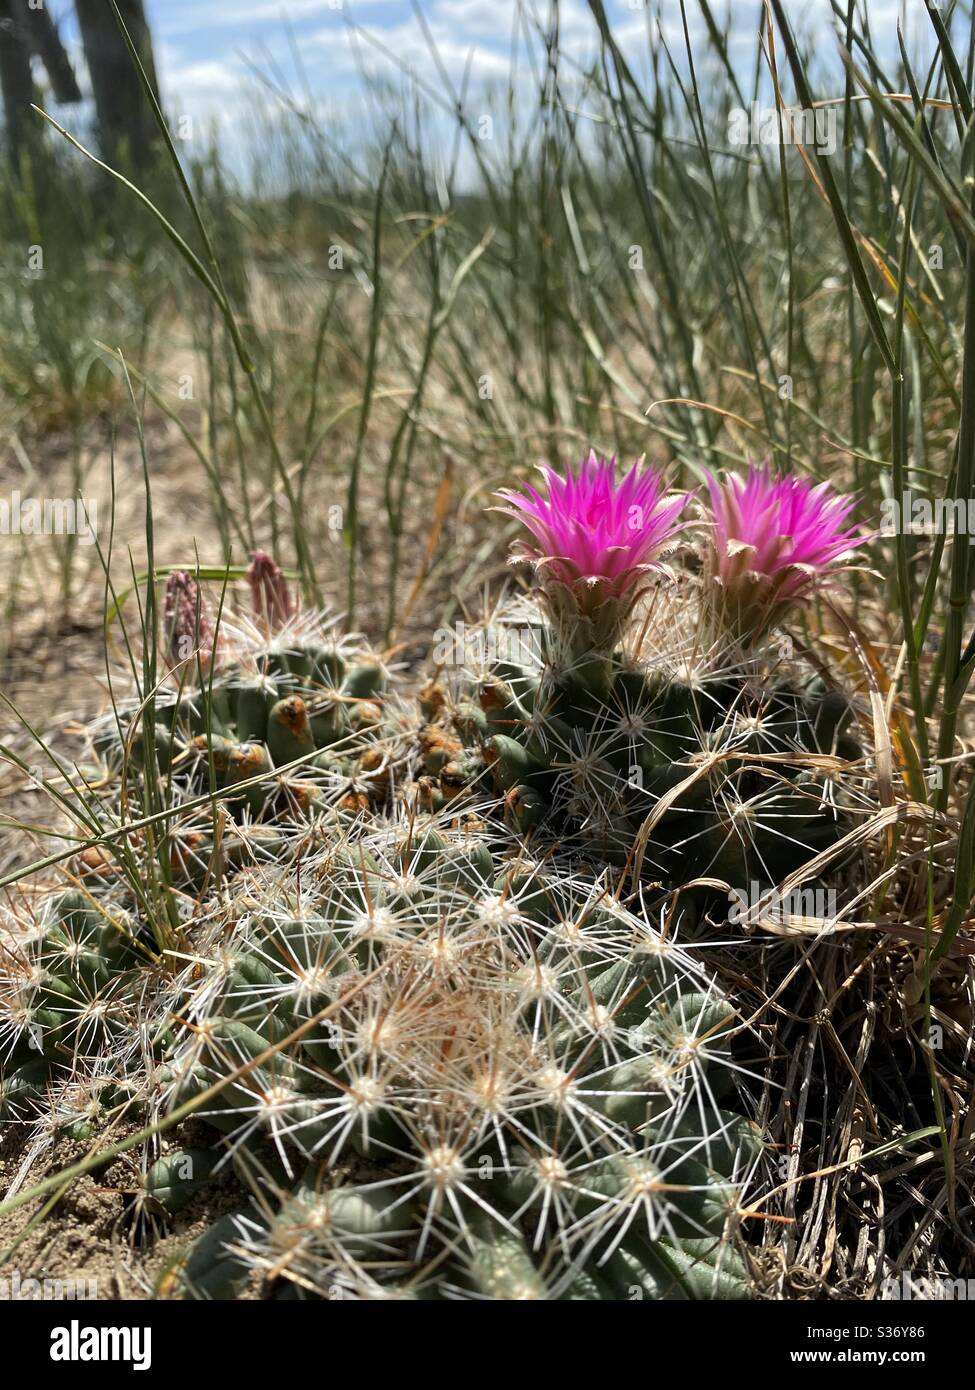 Pin cushion cactus in bloom Stock Photo